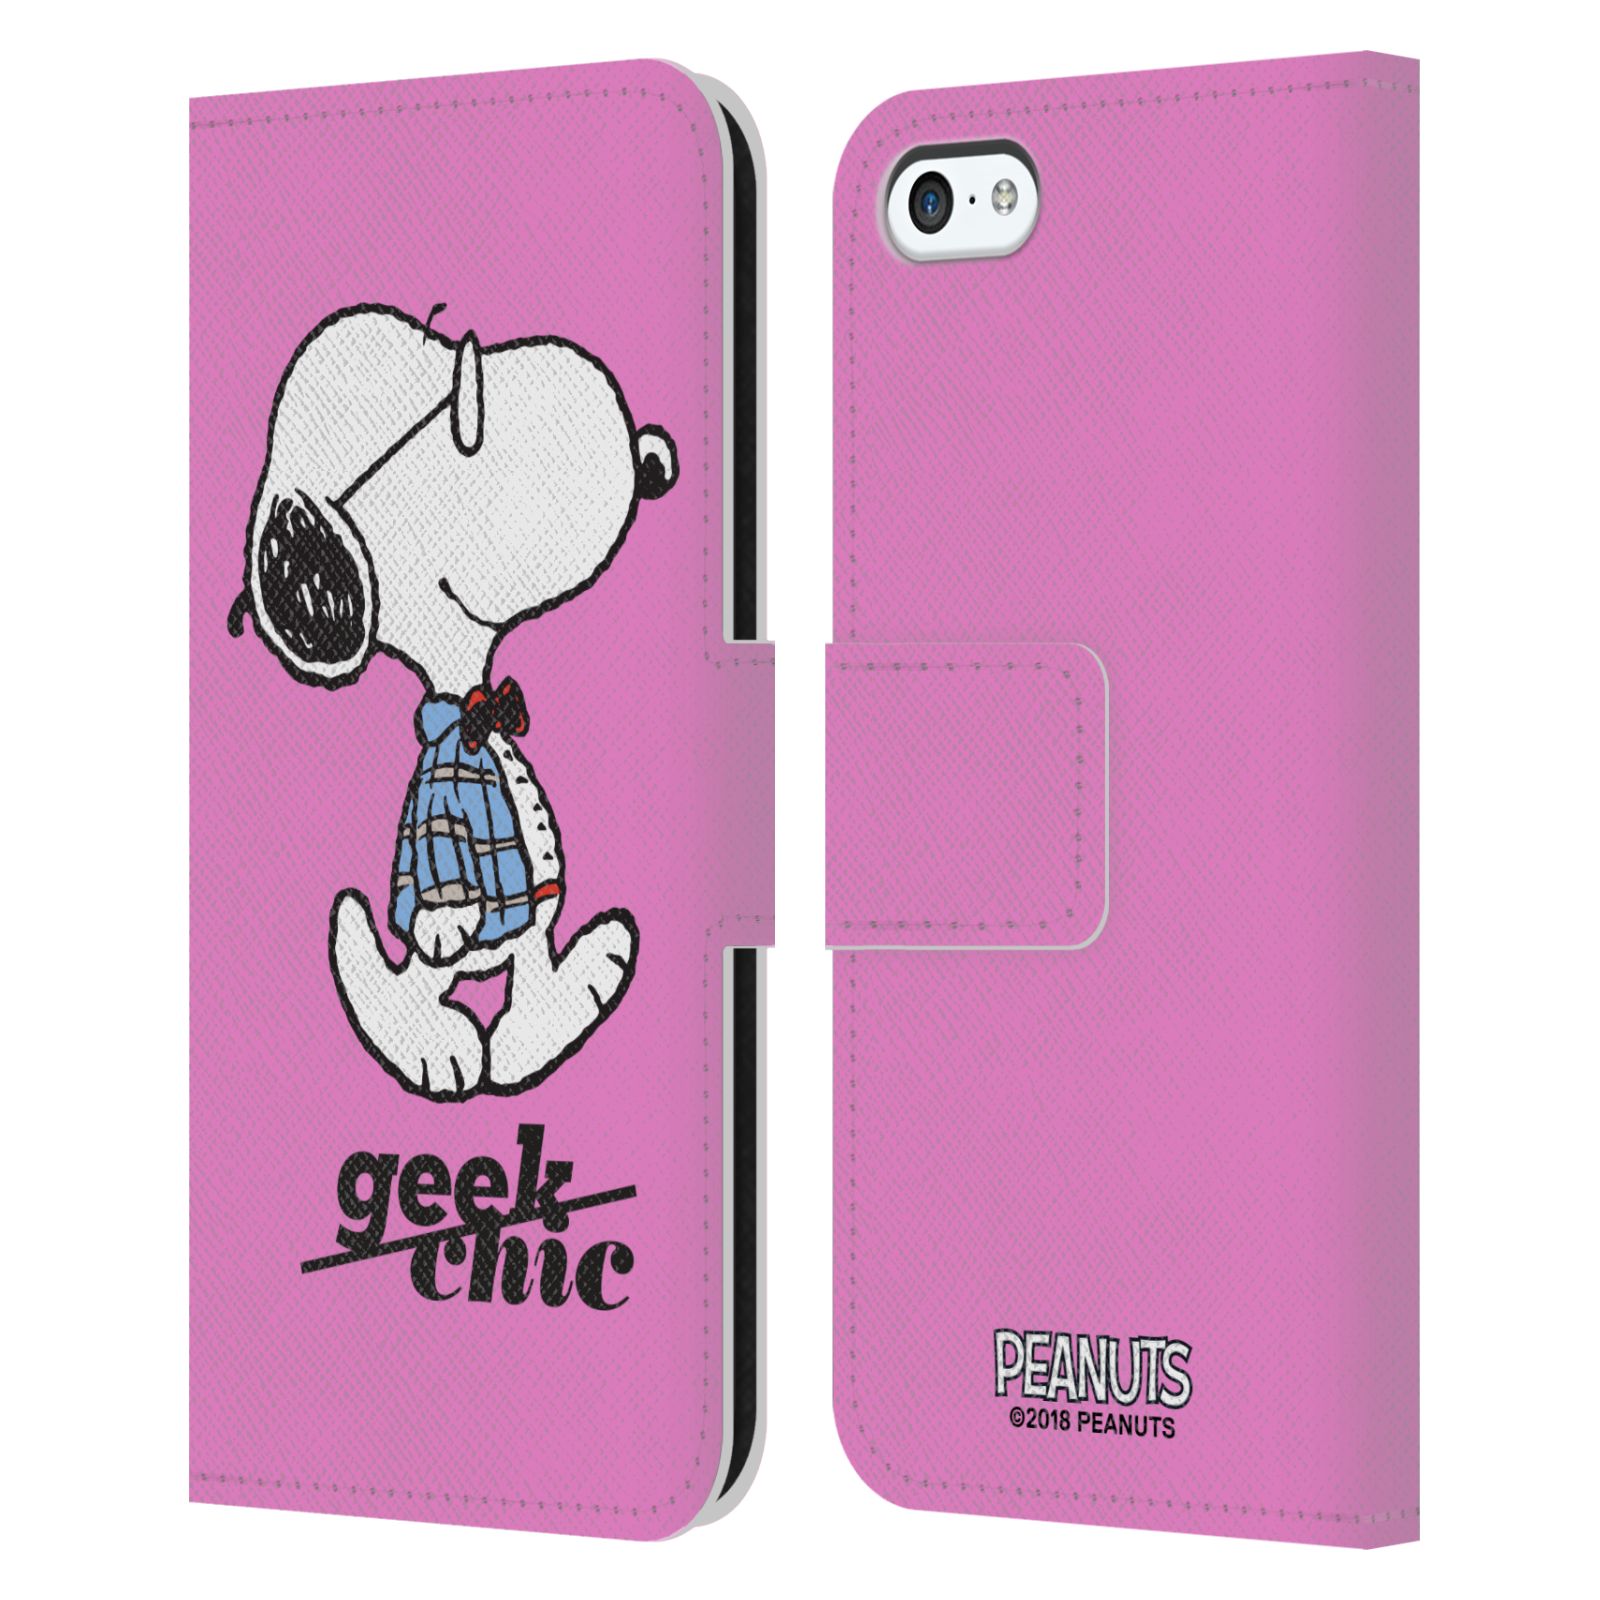 Pouzdro na mobil Apple Iphone 5C - Head Case - Peanuts - růžový pejsek snoopy nerd